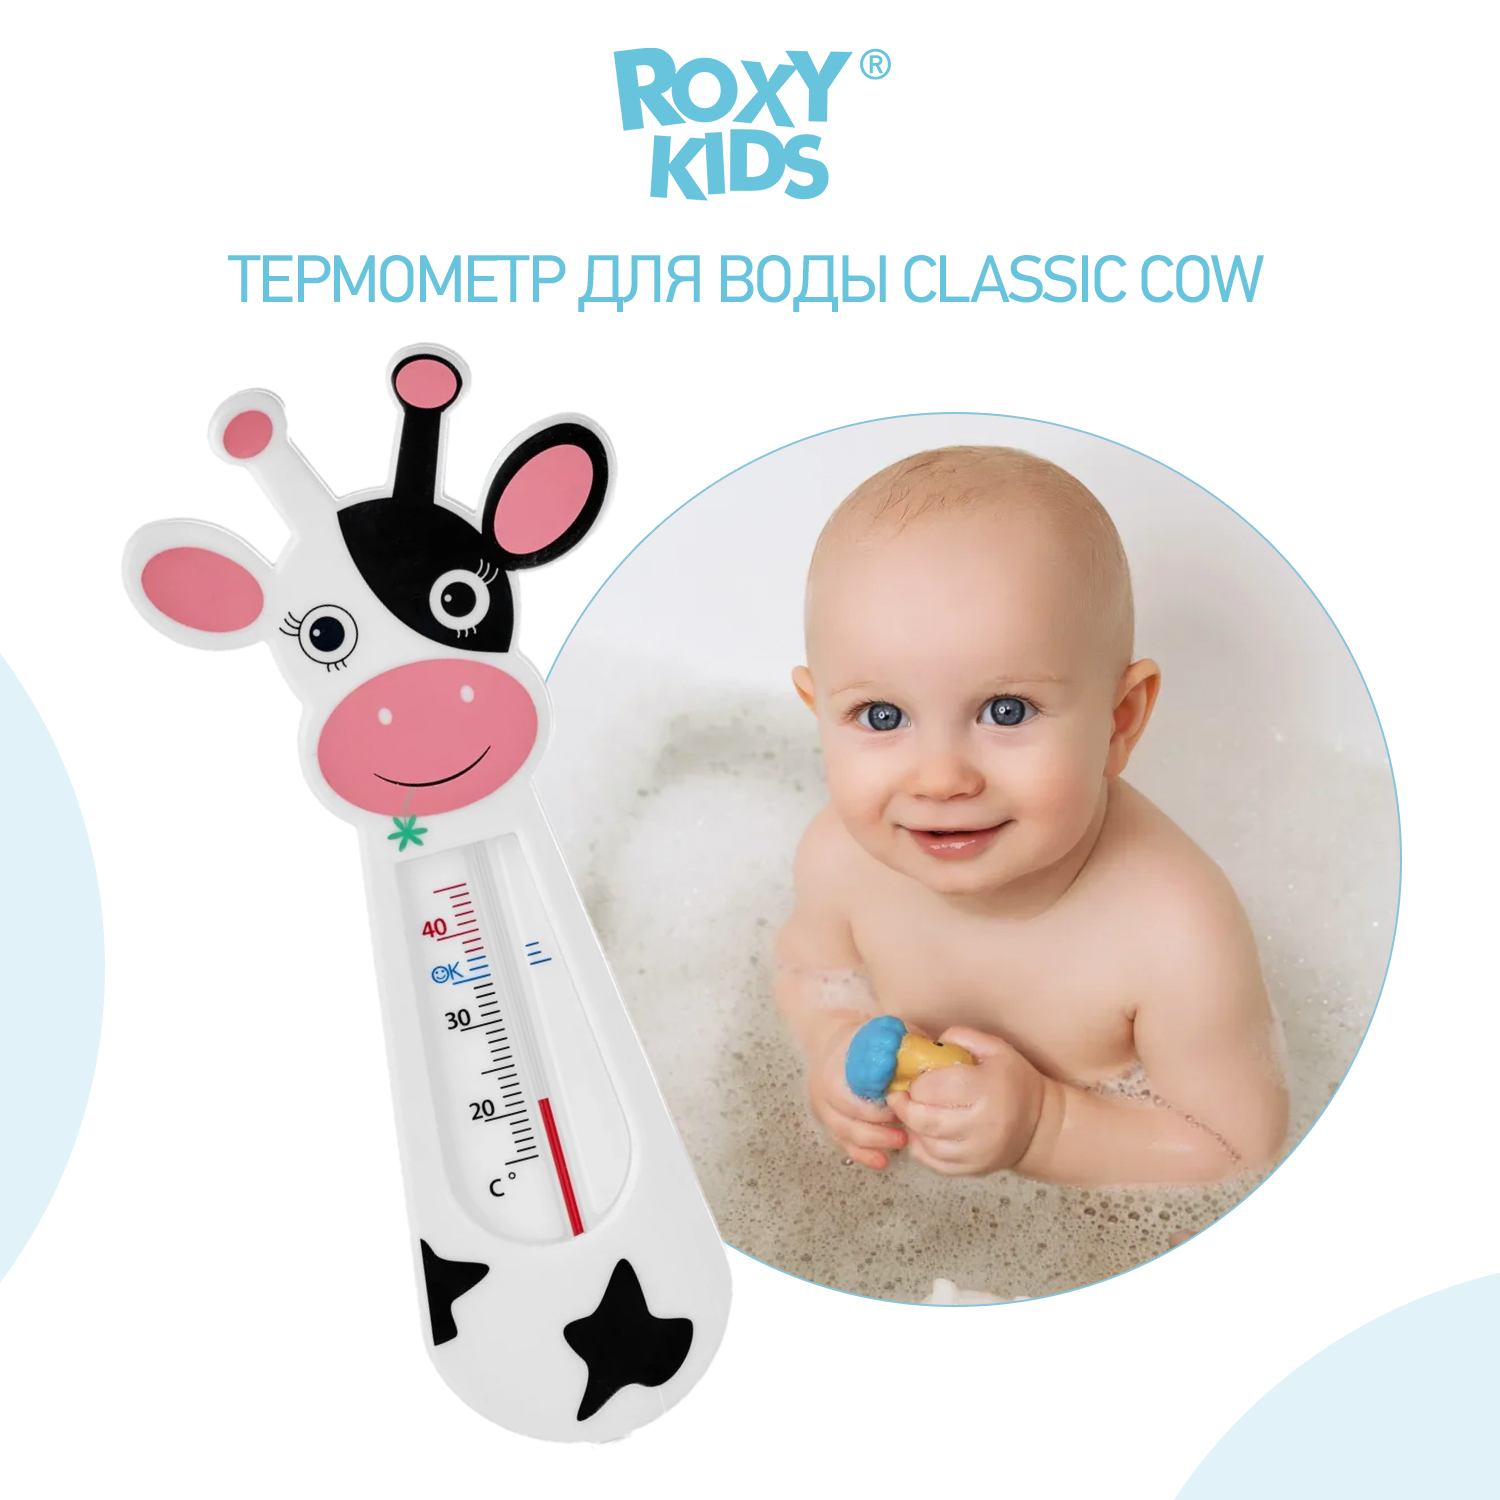 Термометр детский ROXY-KIDS Classic cow для купания в ванночке - фото 1